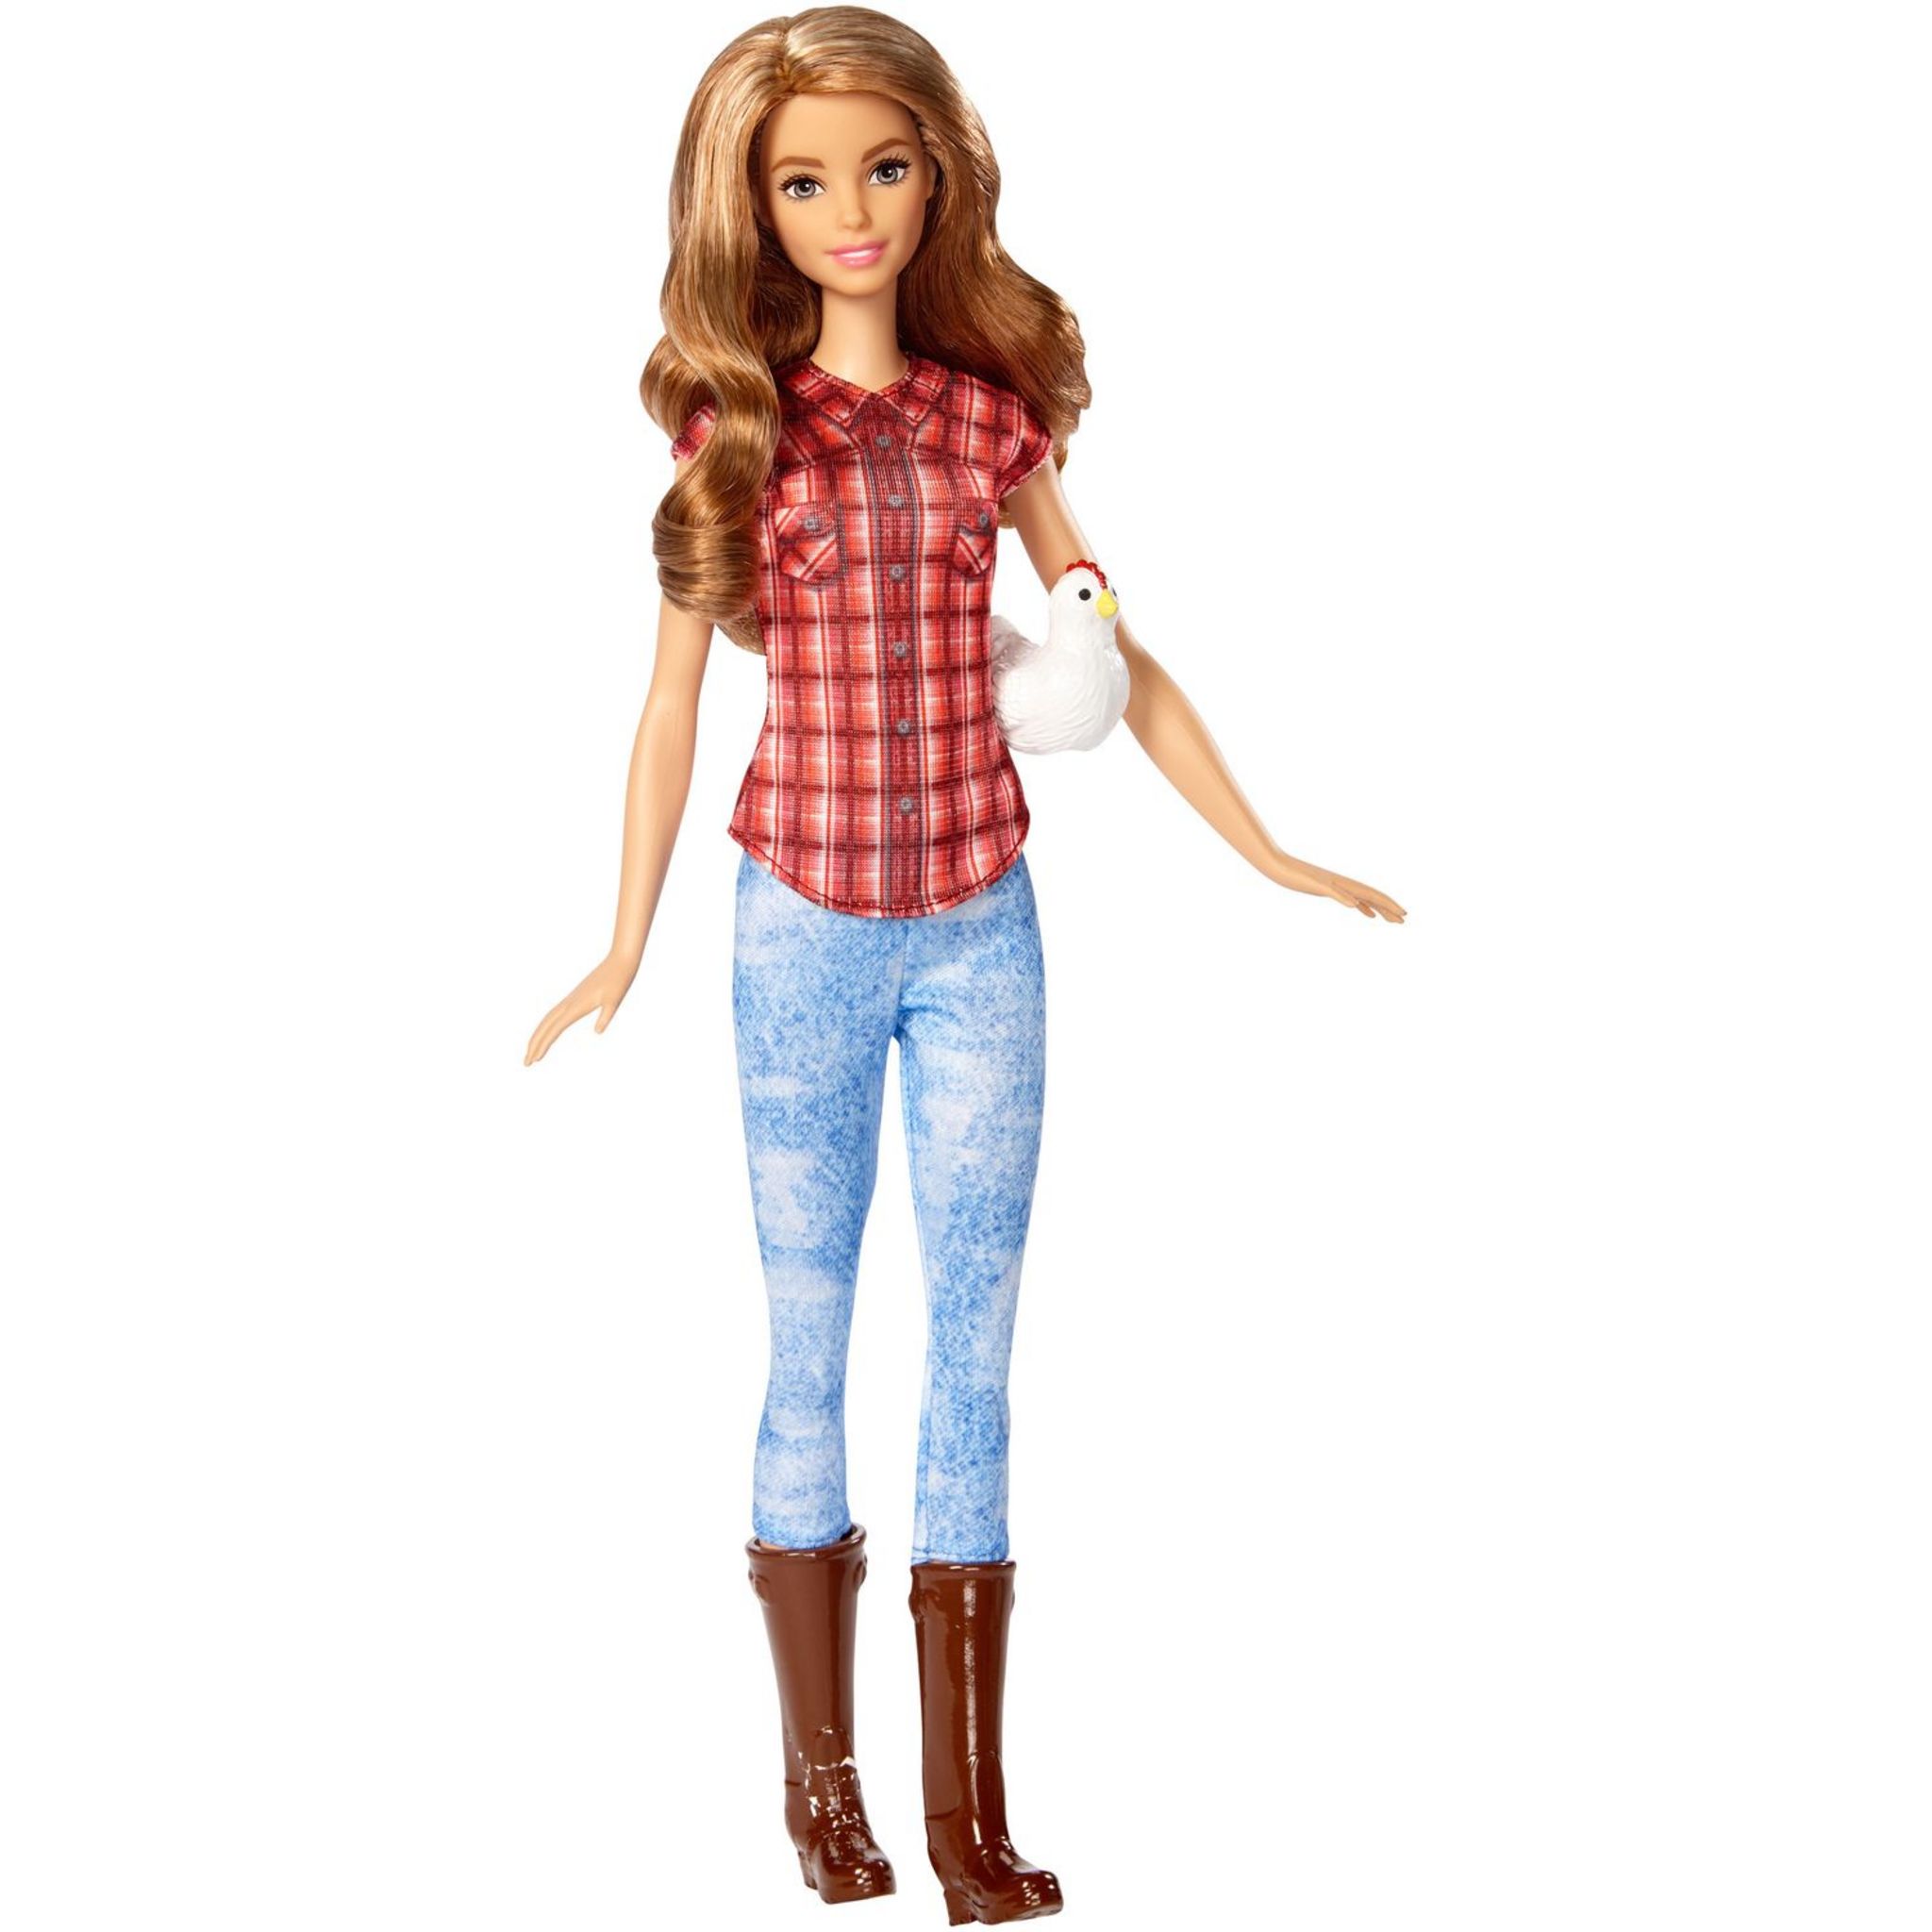 Барби 8 лет. Кукла Барби Mattel. Кукла Барби Маттел. Кукла «Mattel Barbie t7439».